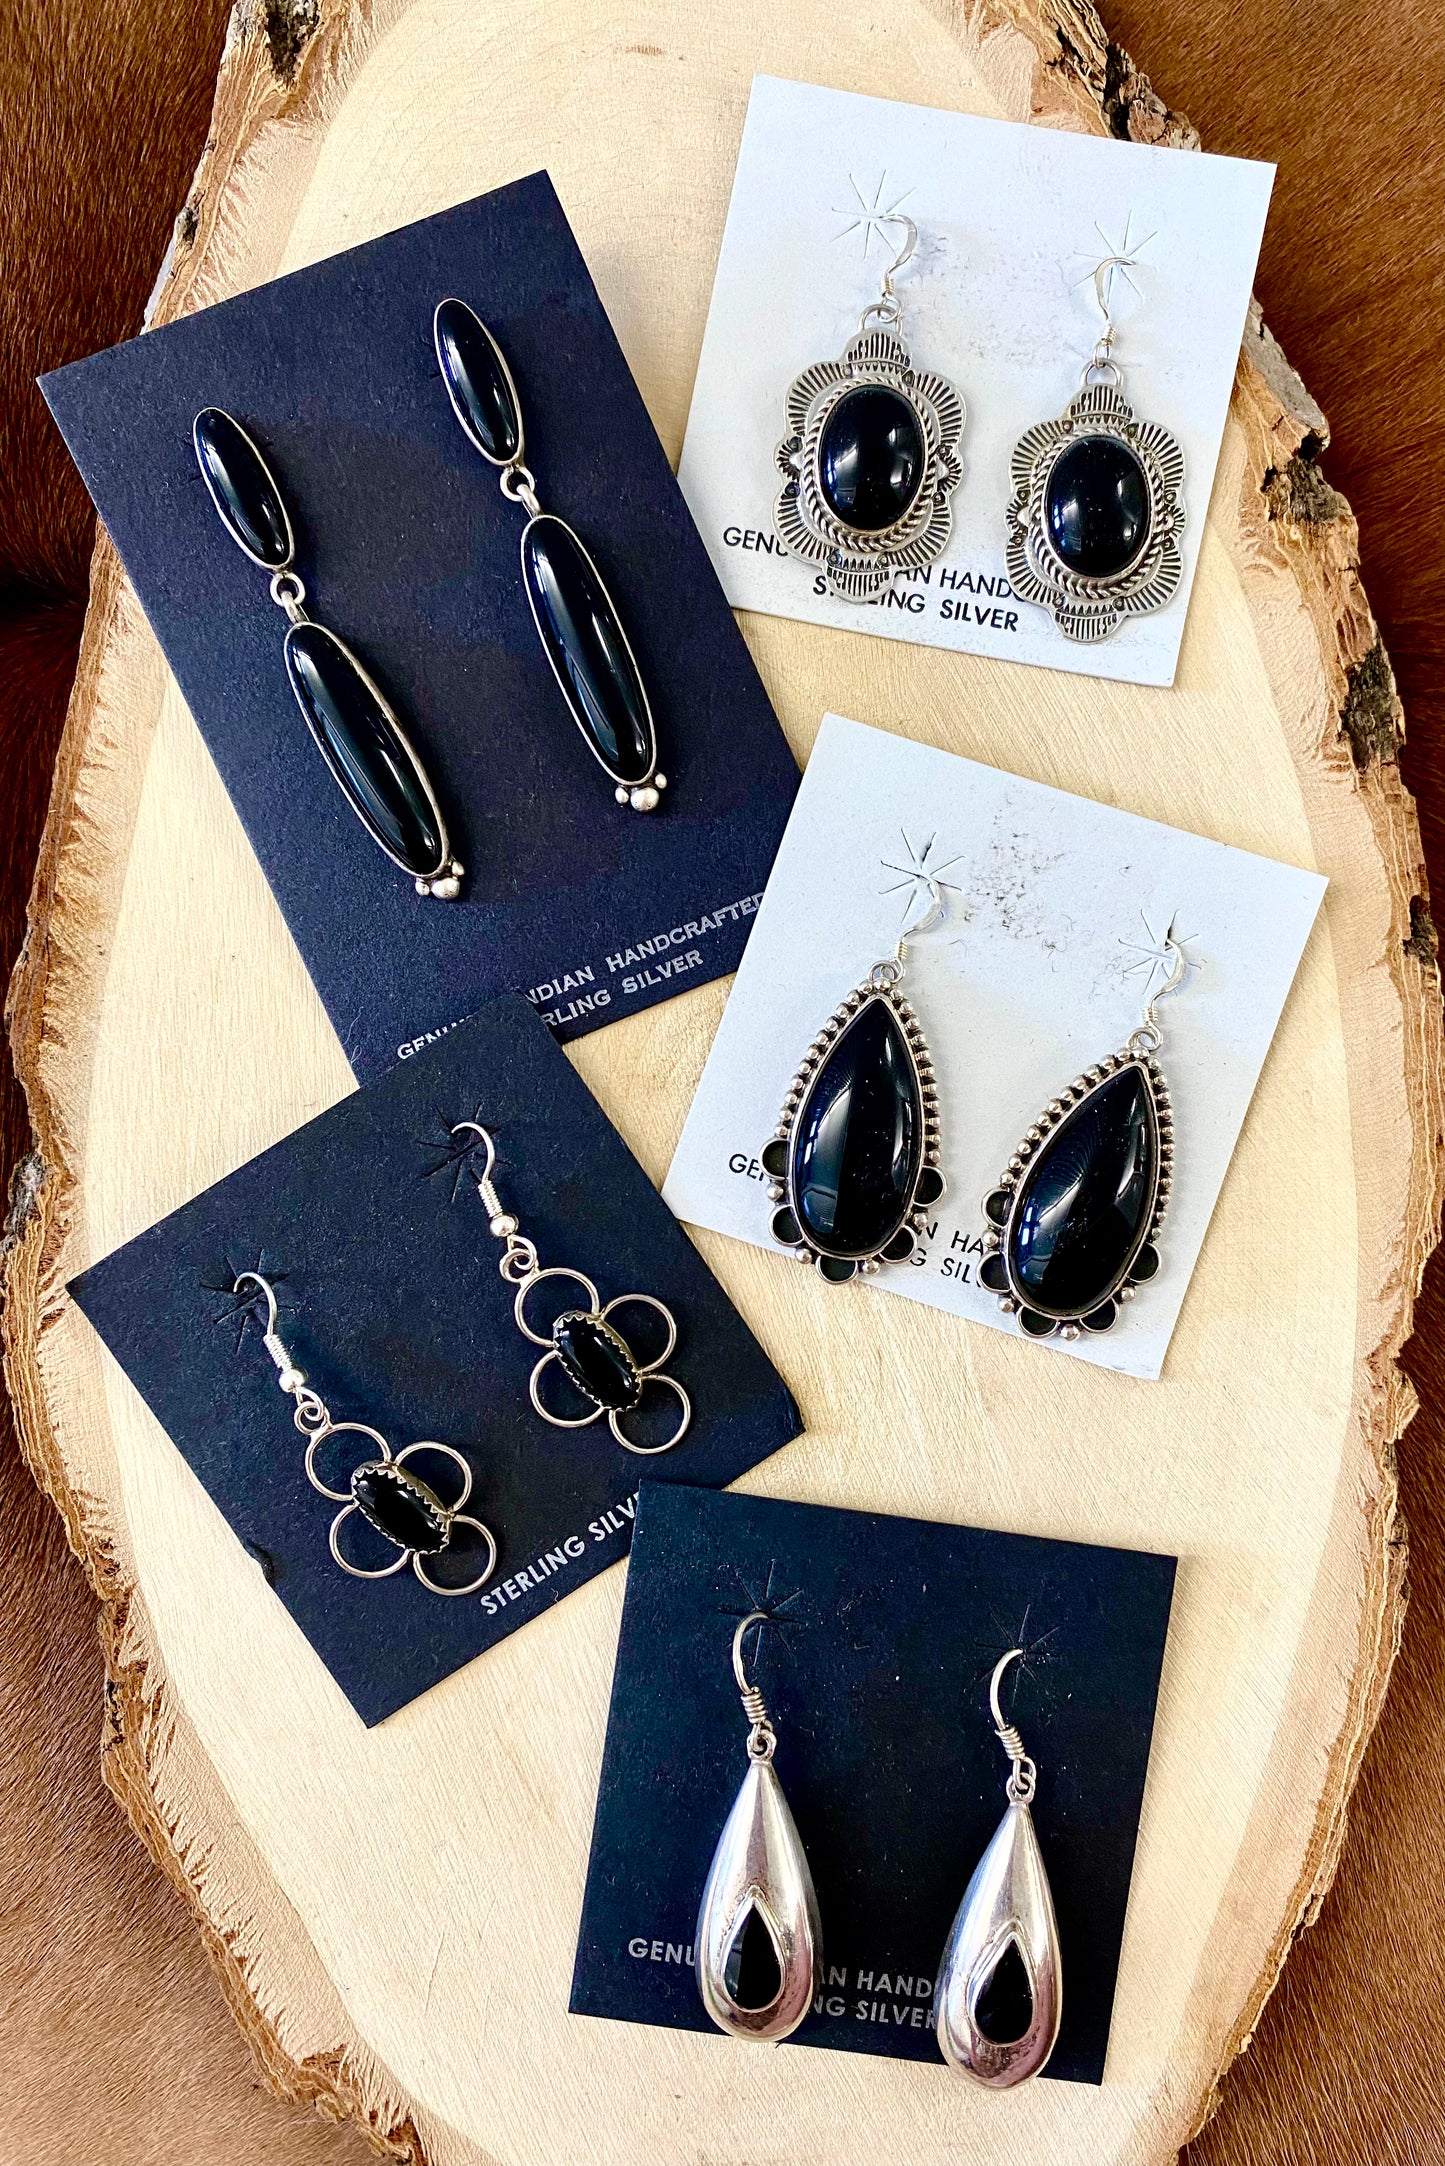 The Jasmine Black Onyx Earrings By Carol Wylie